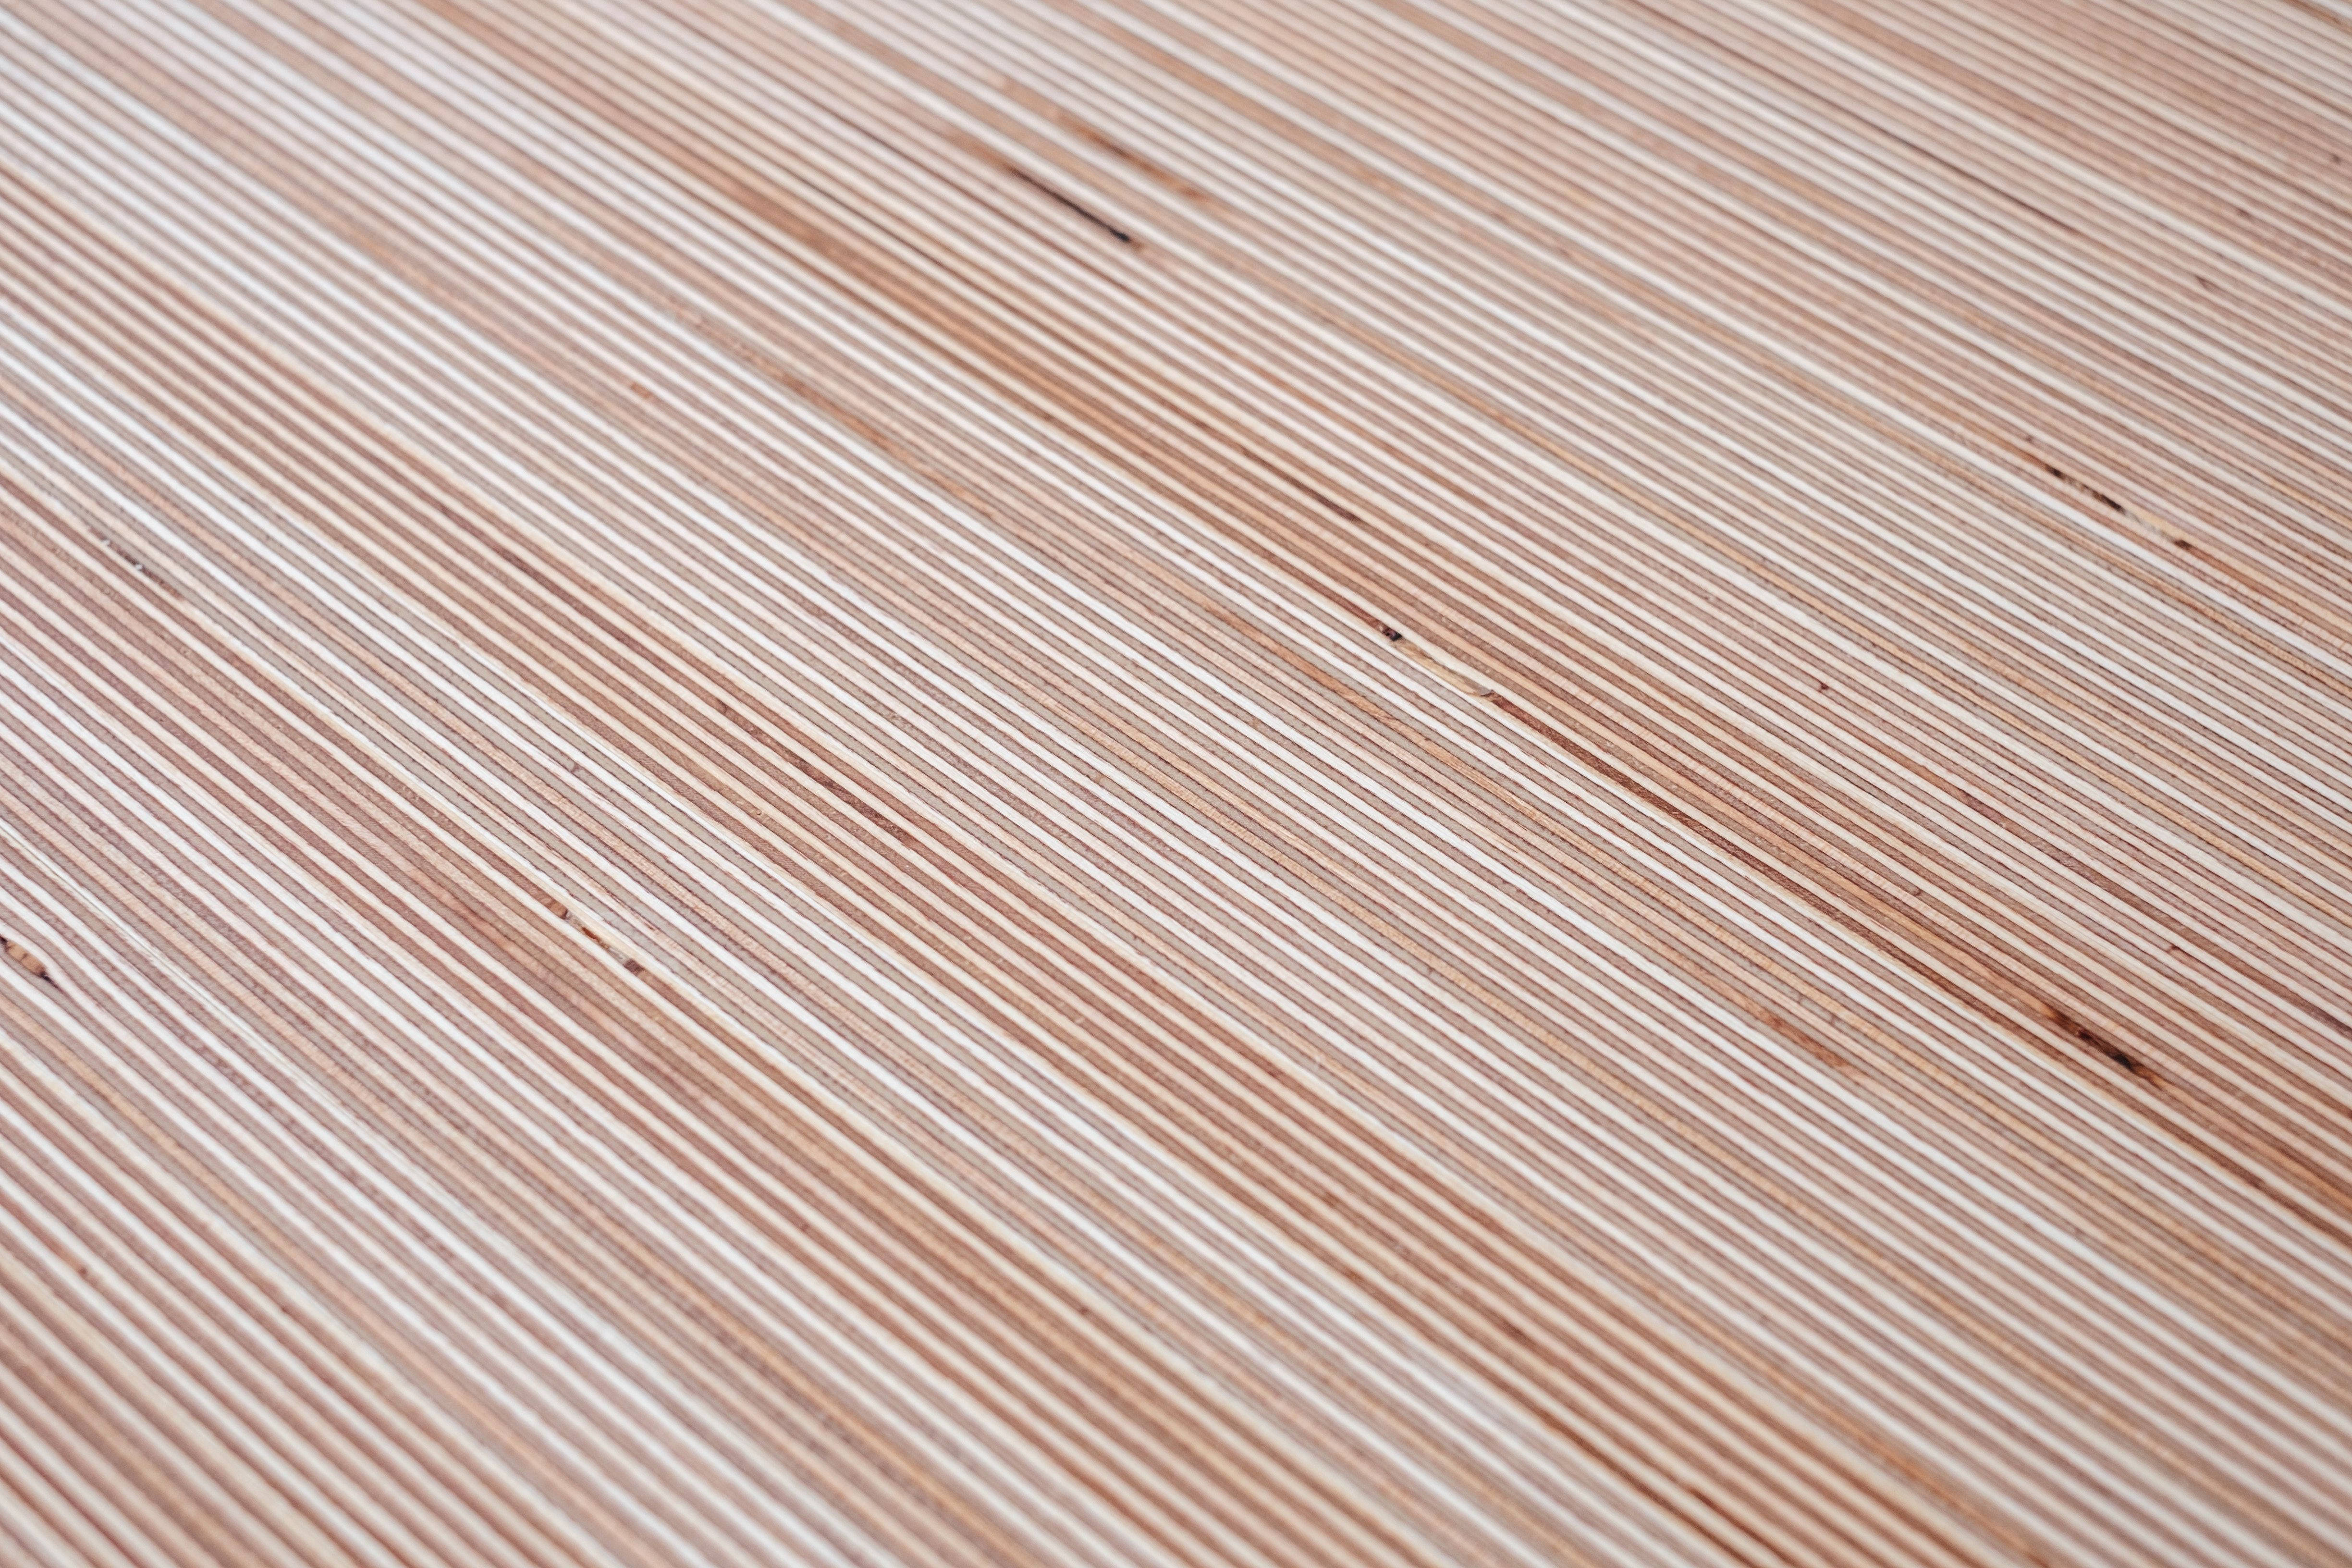 Brown Aesthetic Wood Texture Laptop